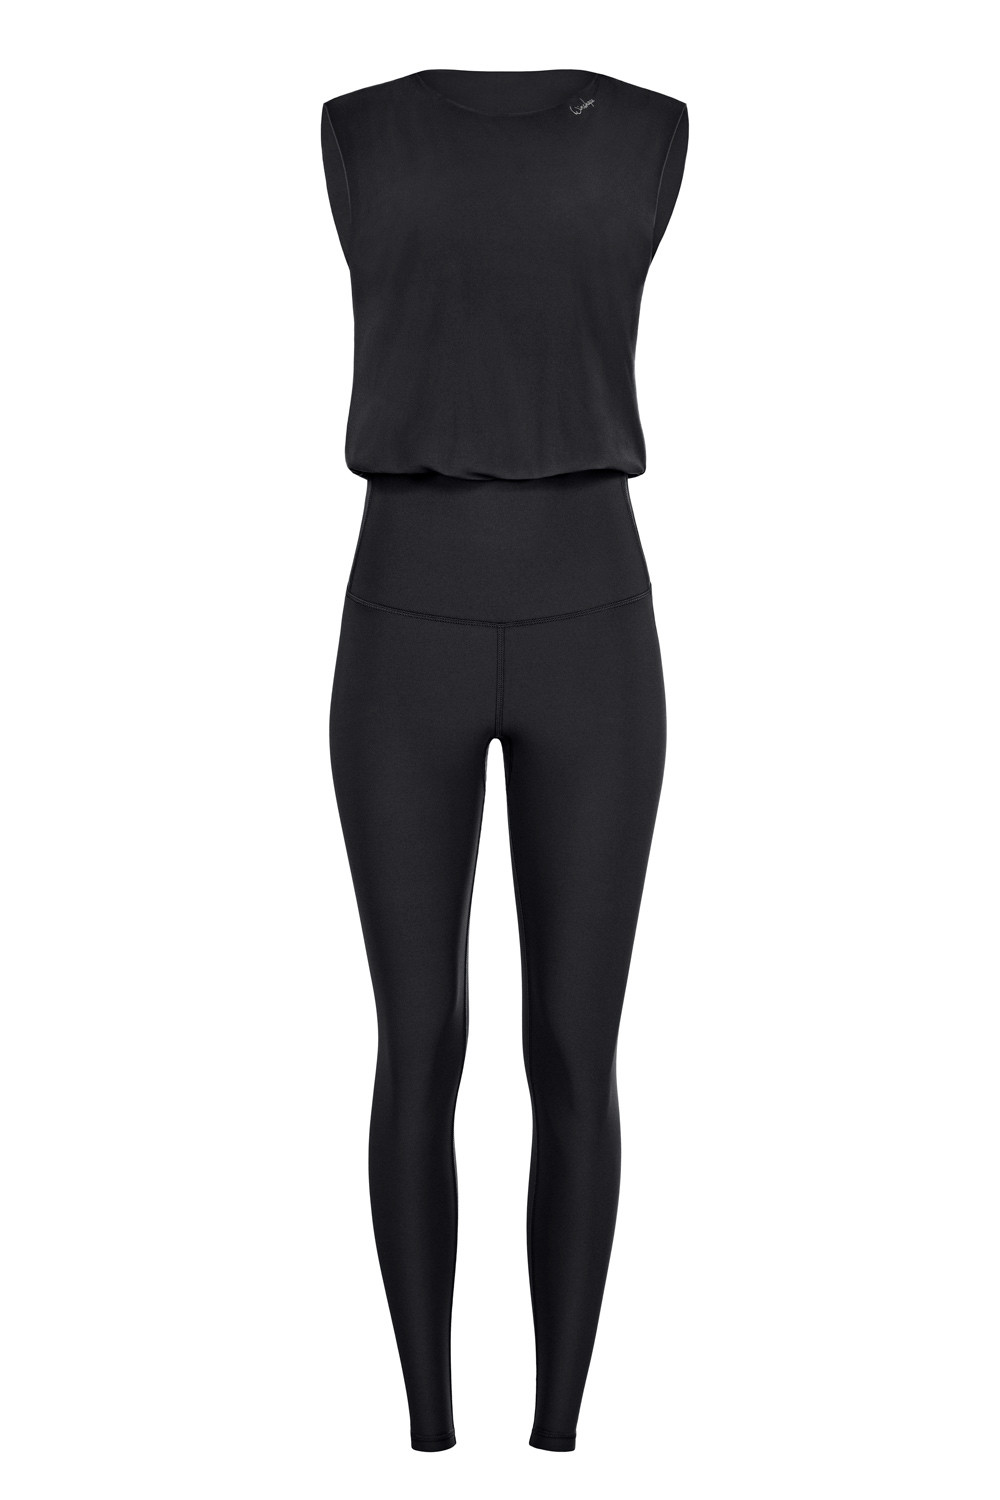 Jumpsuit Style JS102LSC, Functional schwarz, Comfort Winshape Comfort